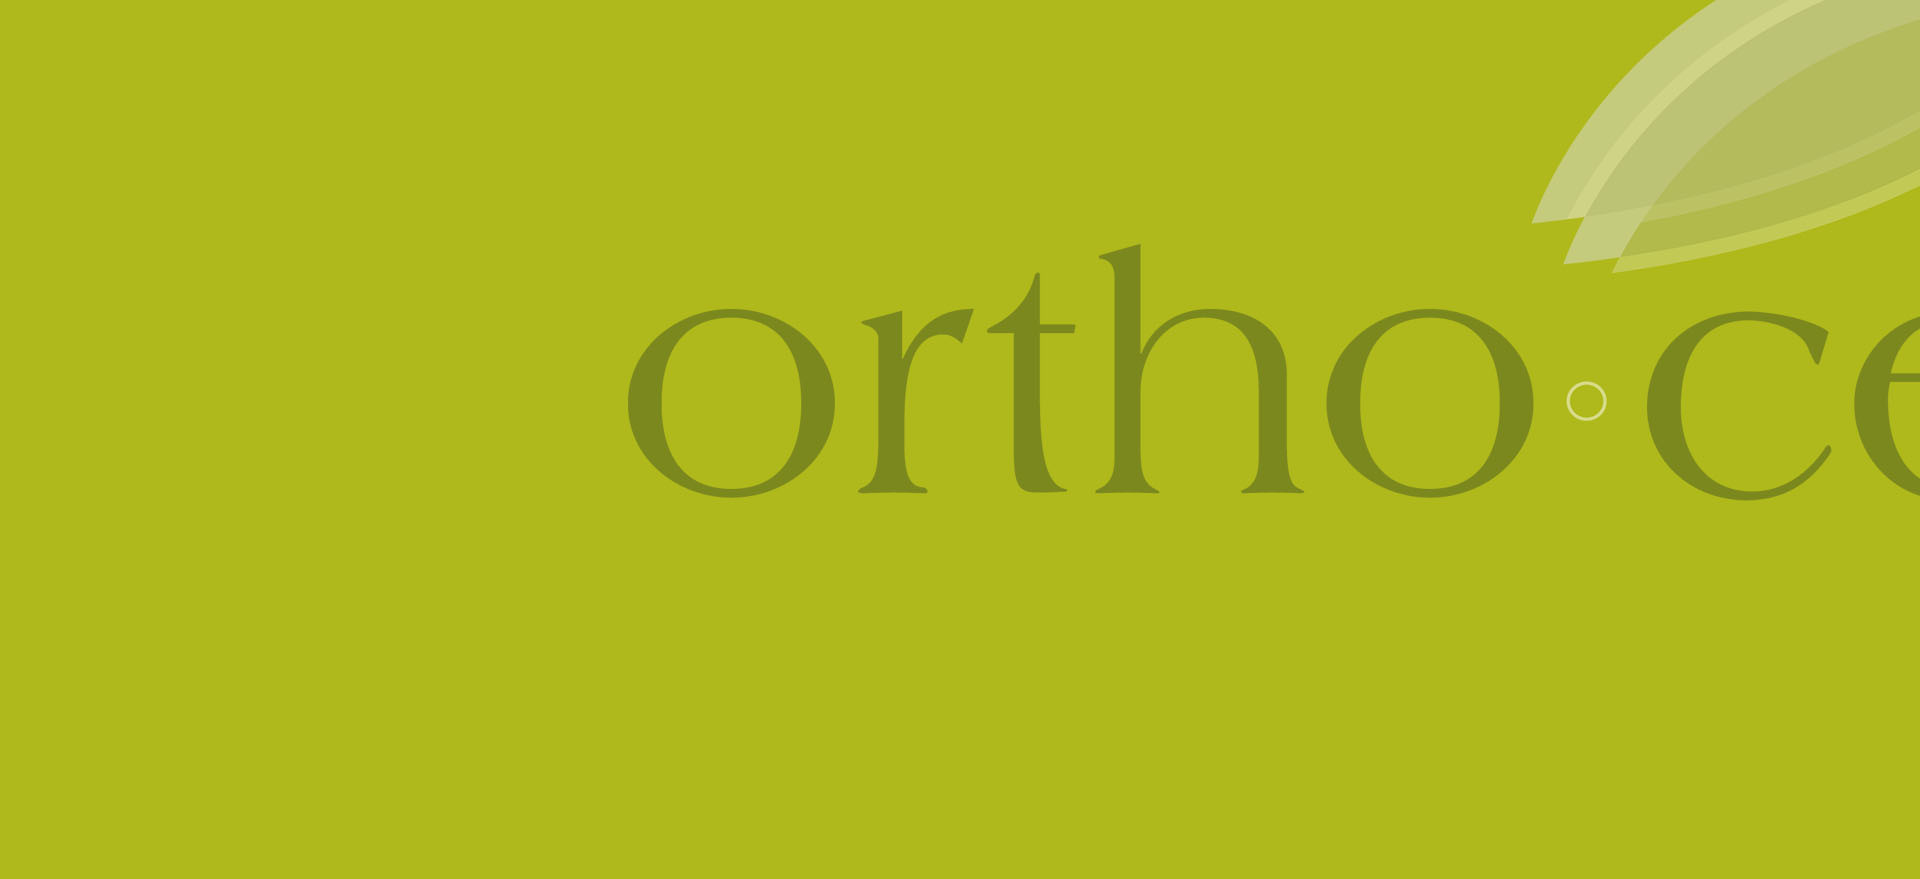 Orthocell-Header-Graphic-v2